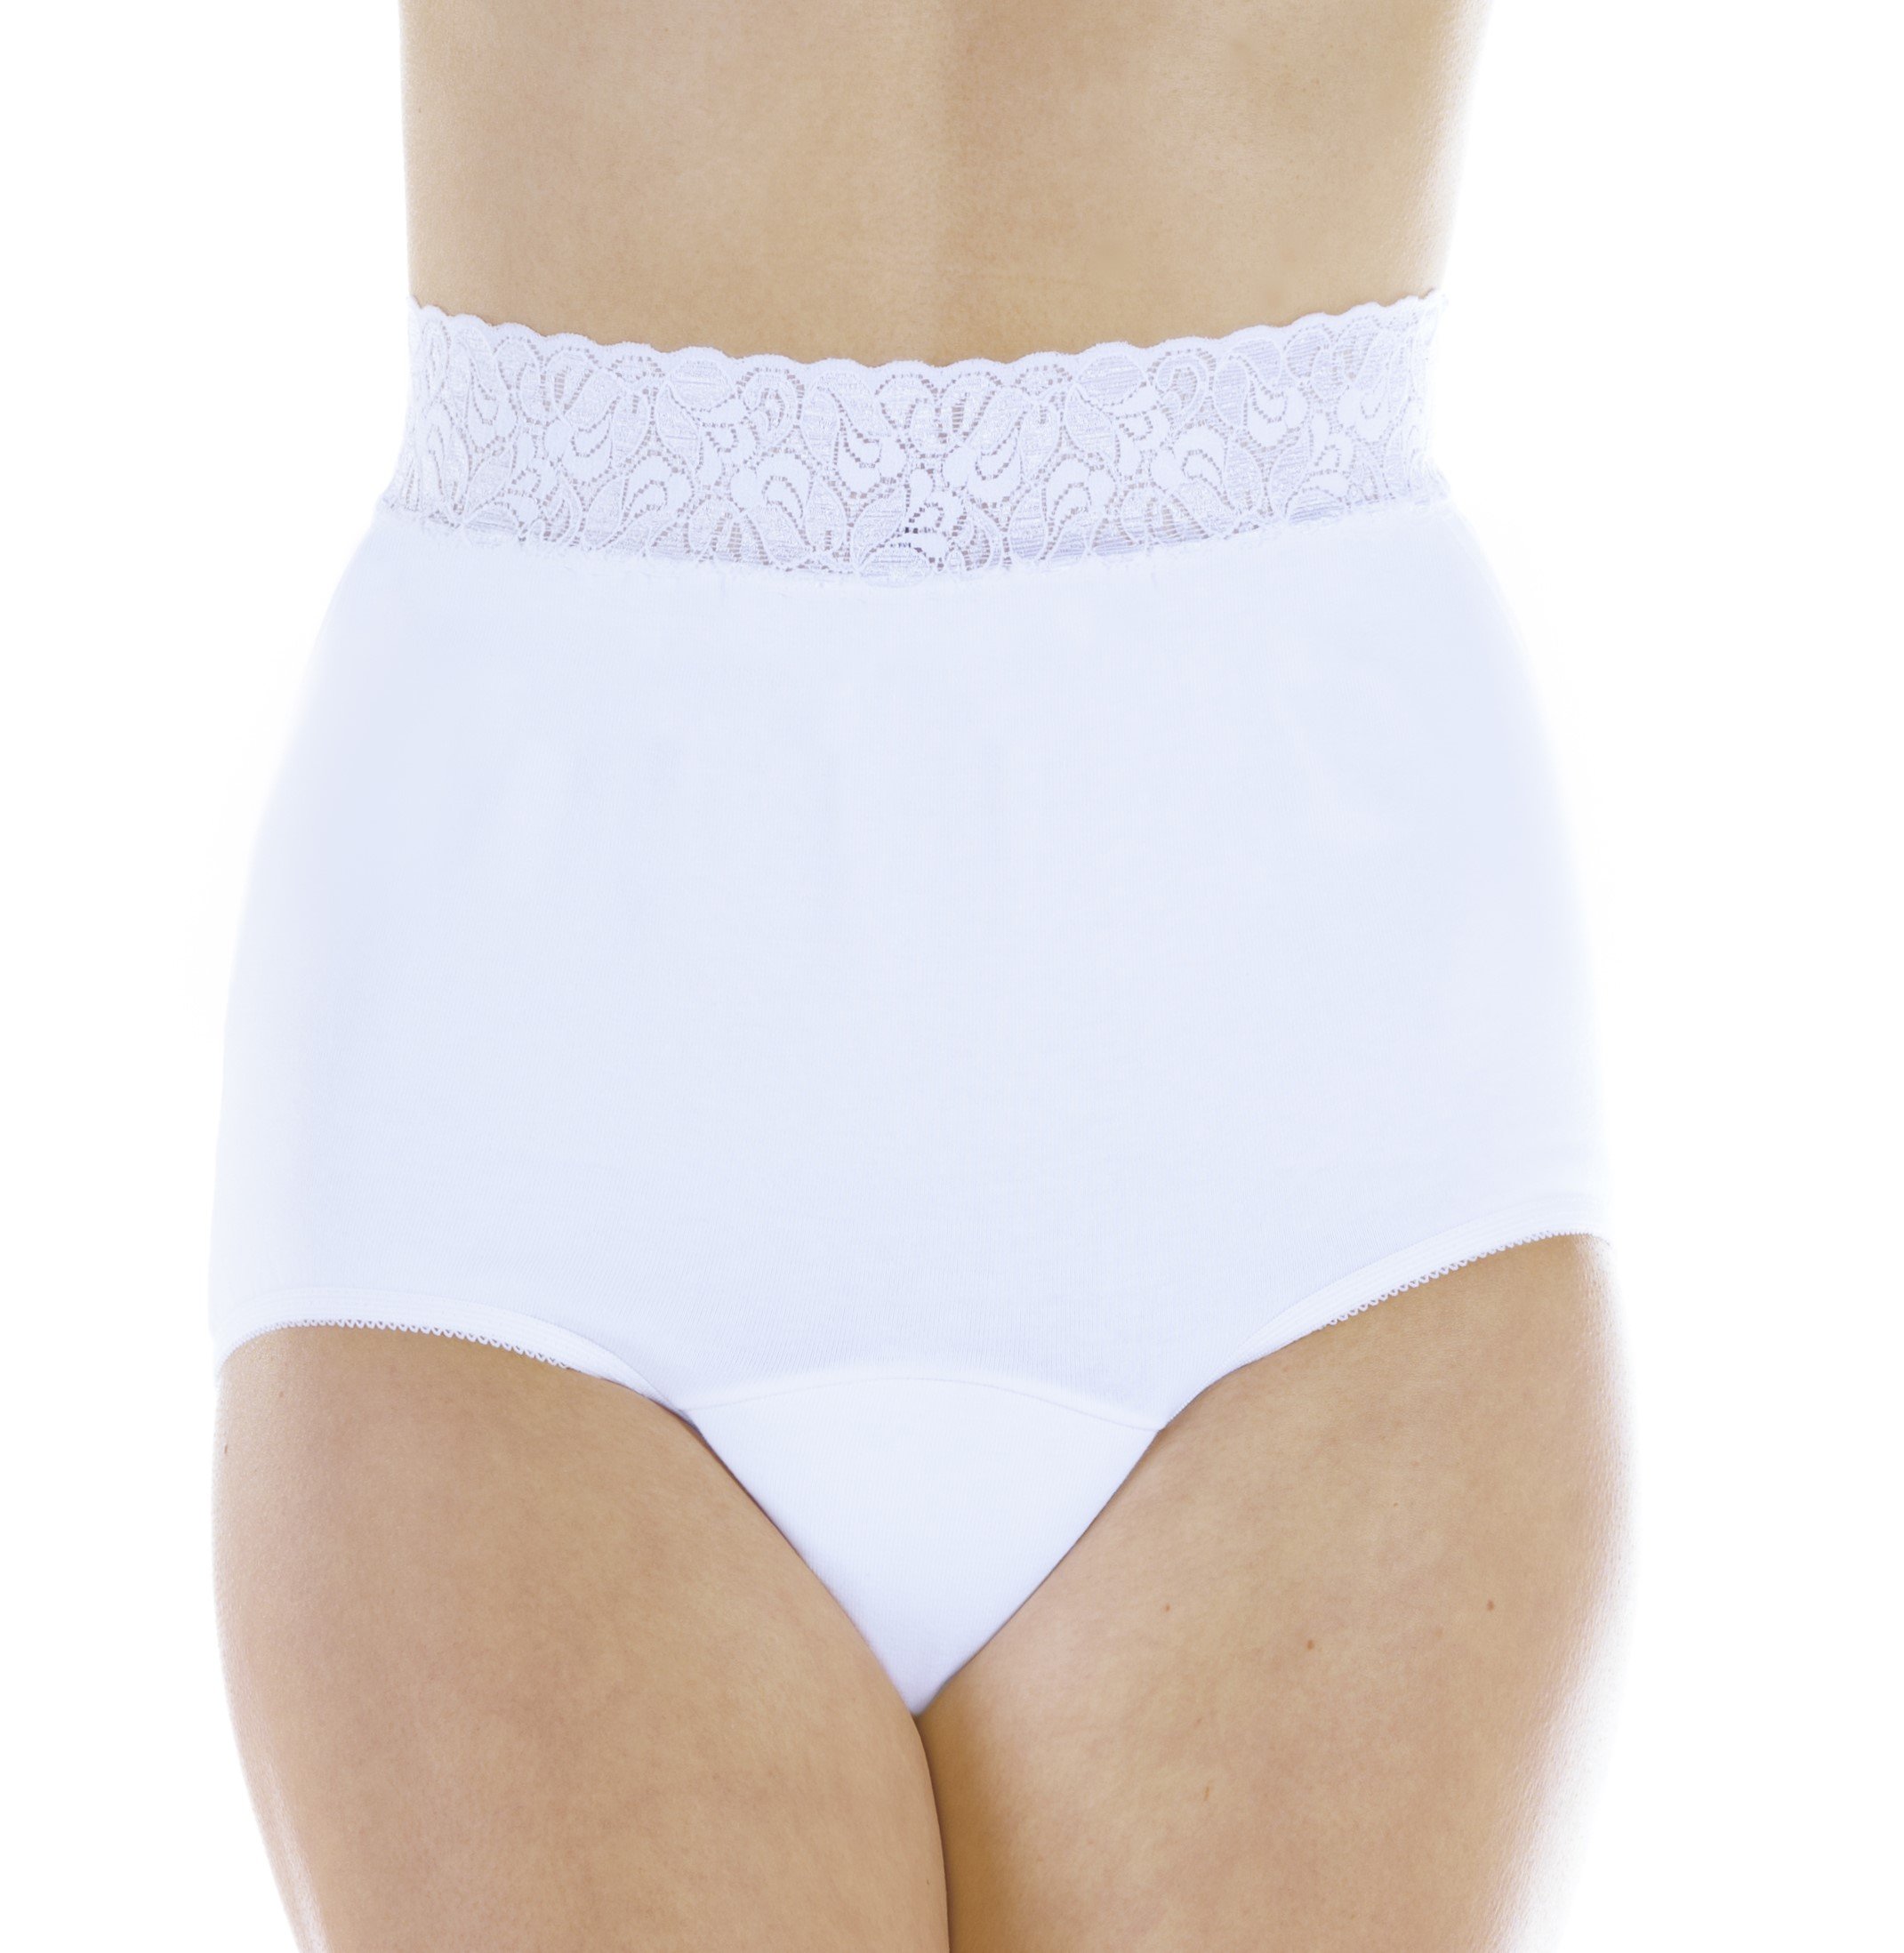 Lace Trim Panties - Wearever L10 - Regular Absorbency